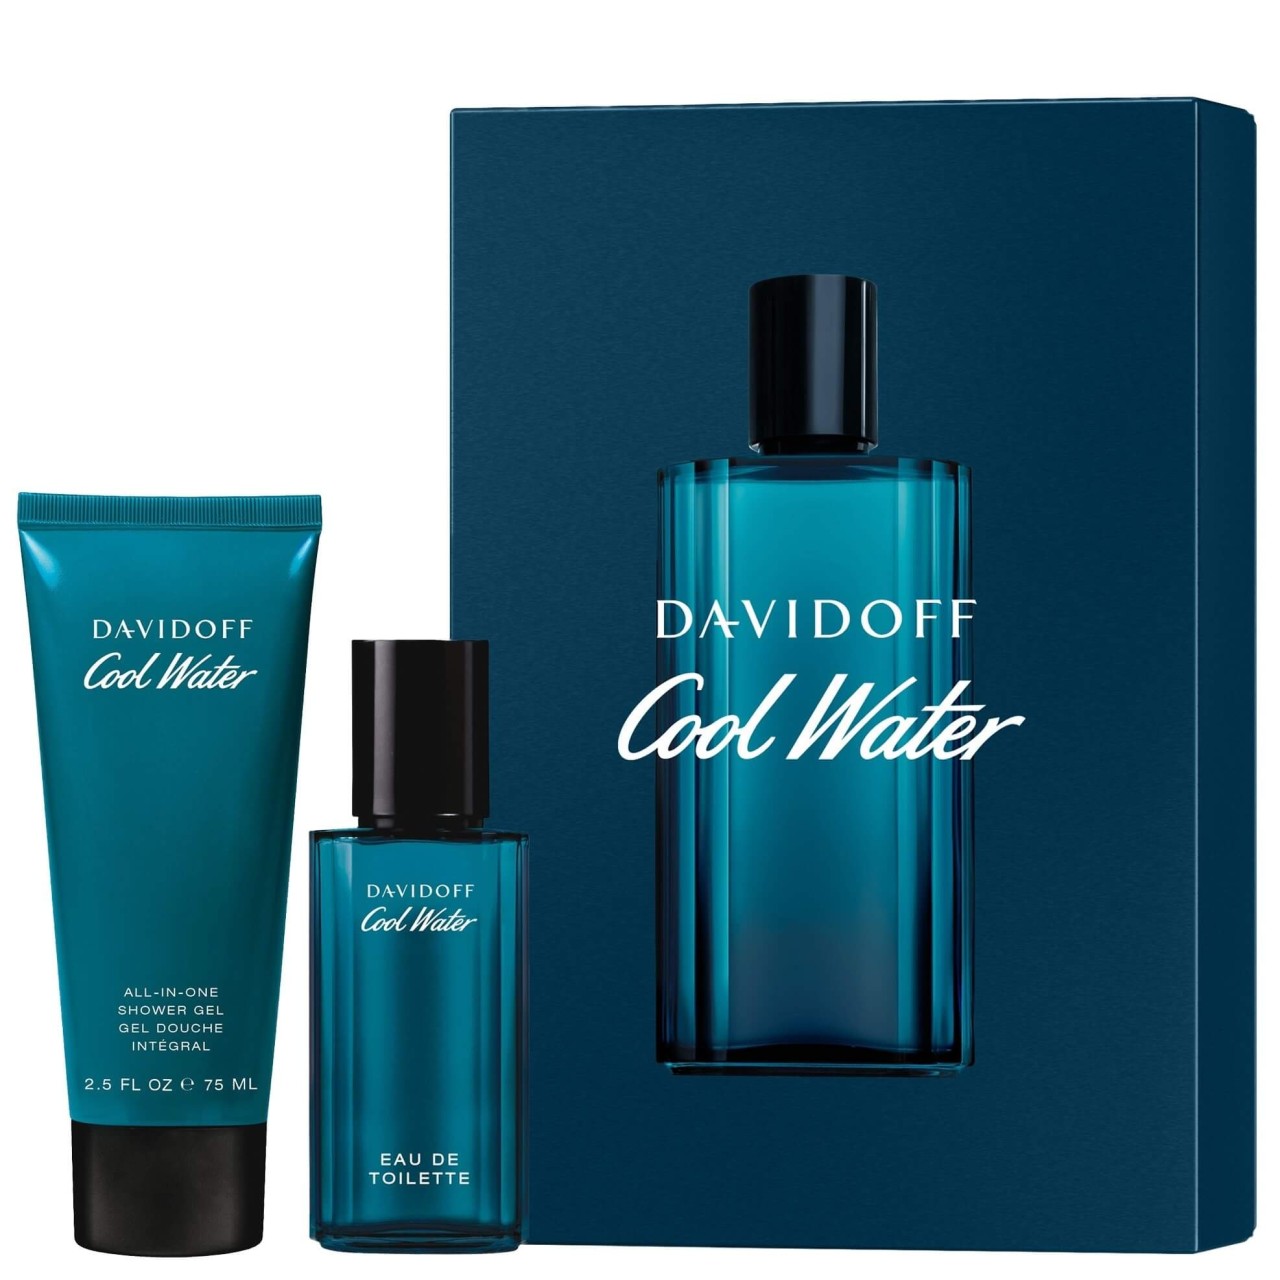 Davidoff - Cool Water Men Eau de Toilette Set - 